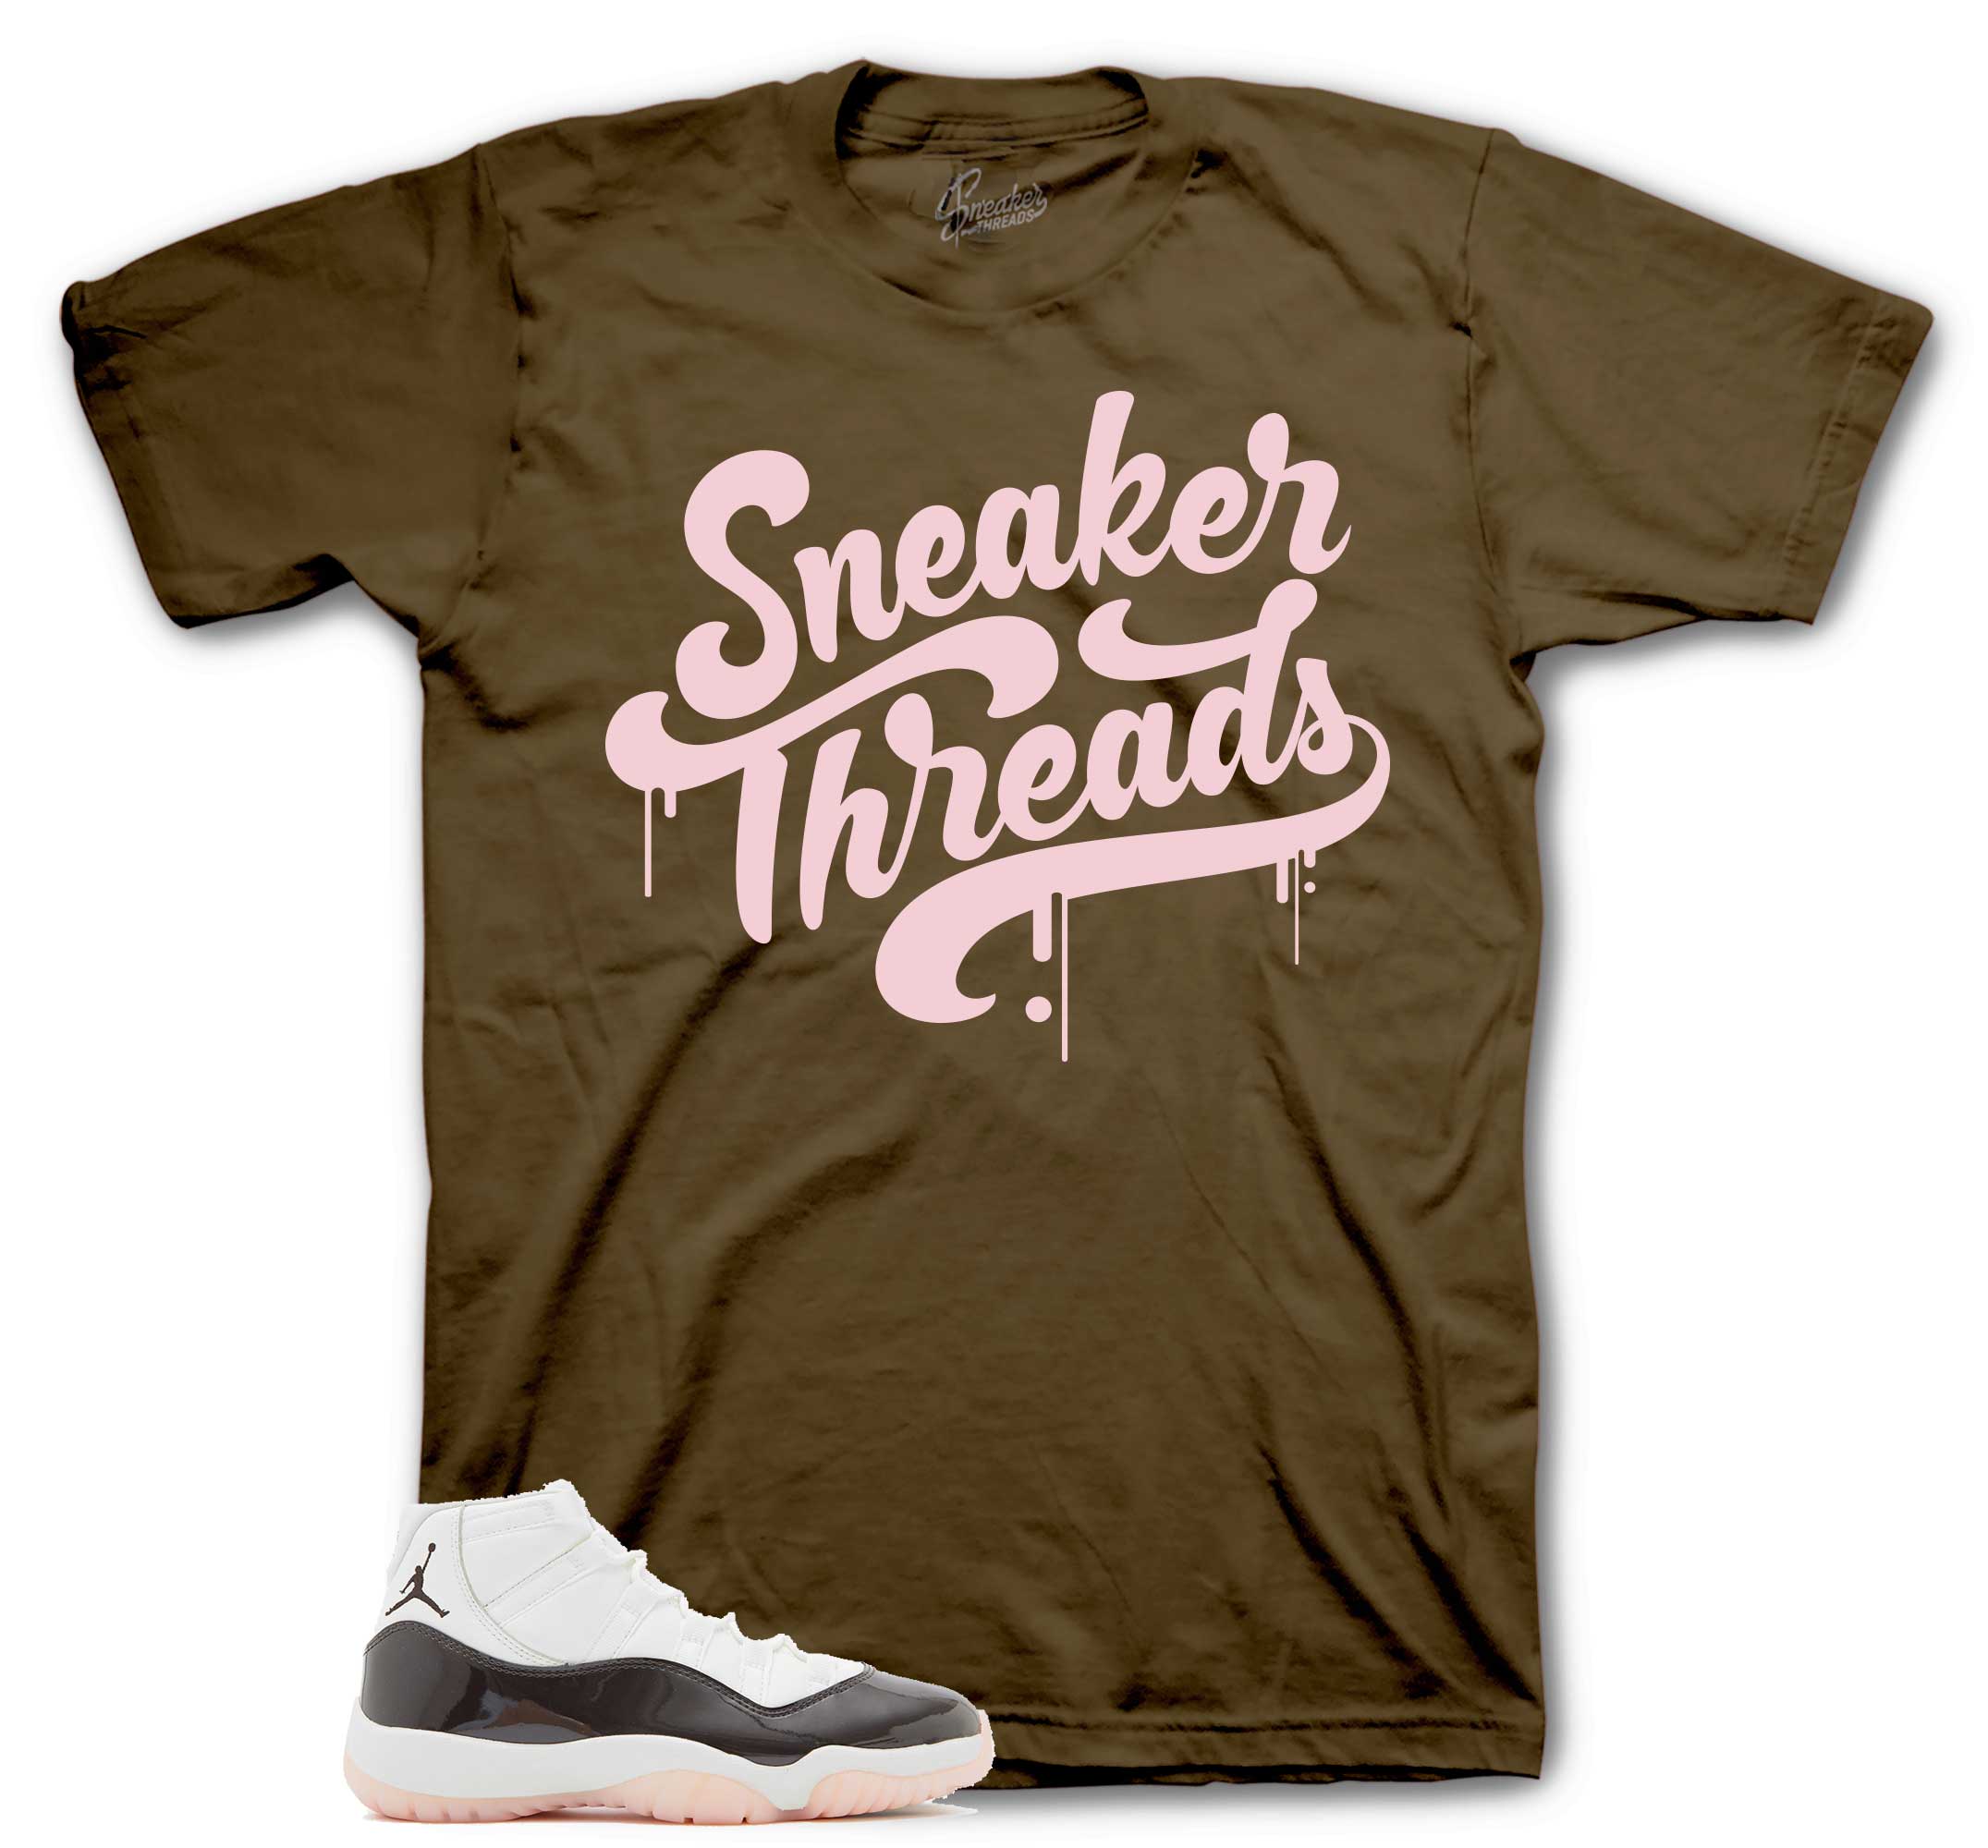 Bred toe Jordan 1 shirts match retro 1 bred apparel match shoes.